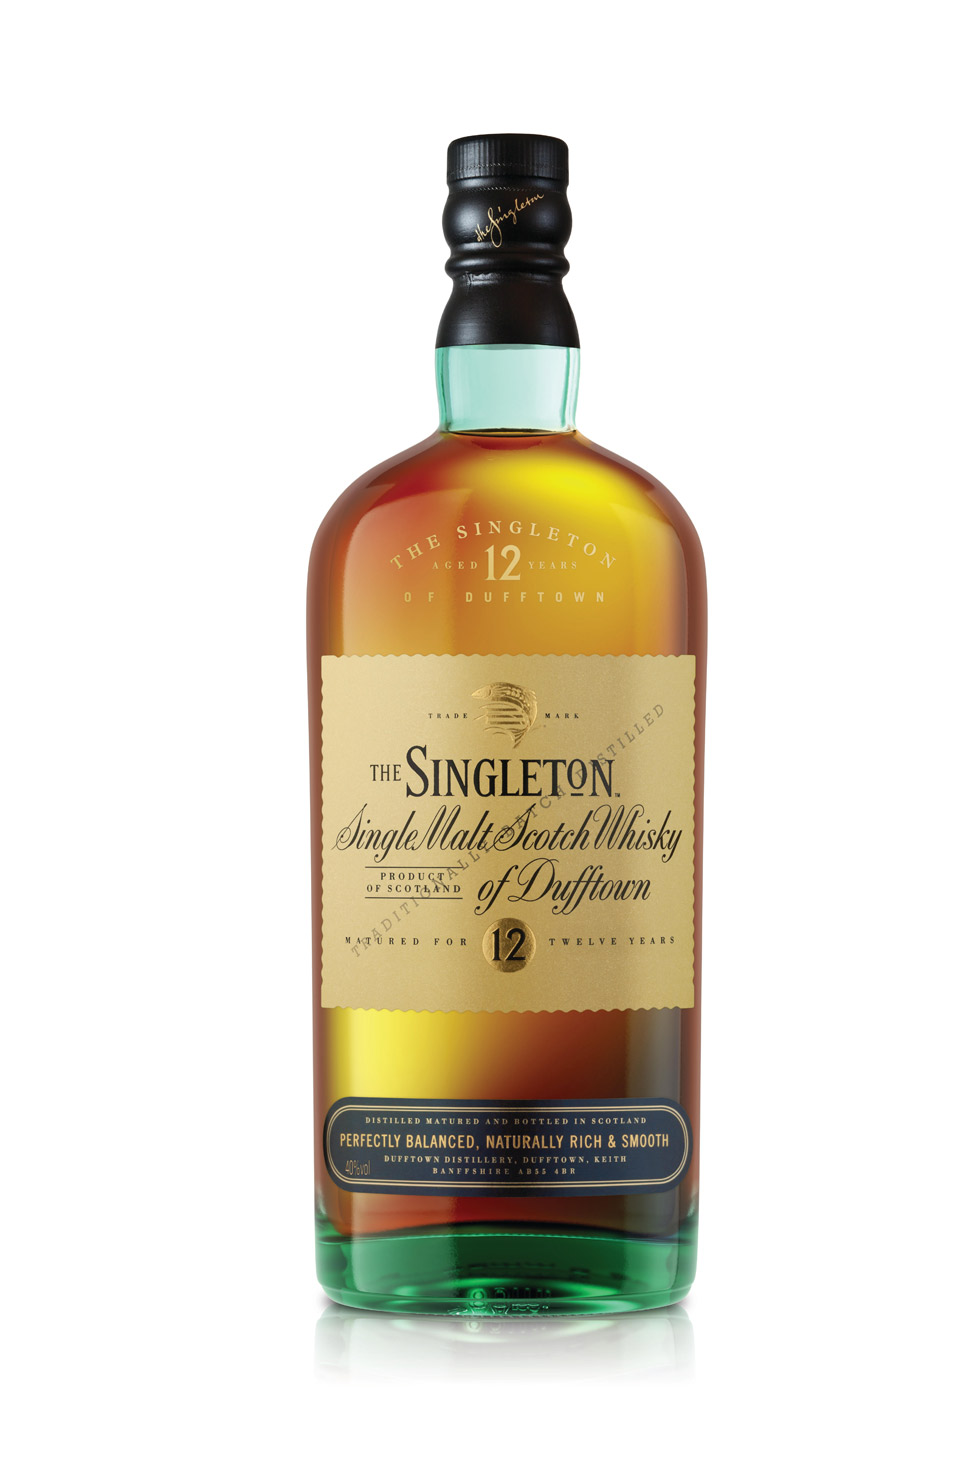 Синглтон 0.7. Виски Синглтон Даффтаун. Виски Singleton Dufftown 18. Виски Синглтон 12 0.7. Singleton Single Malt Scotch Whisky.